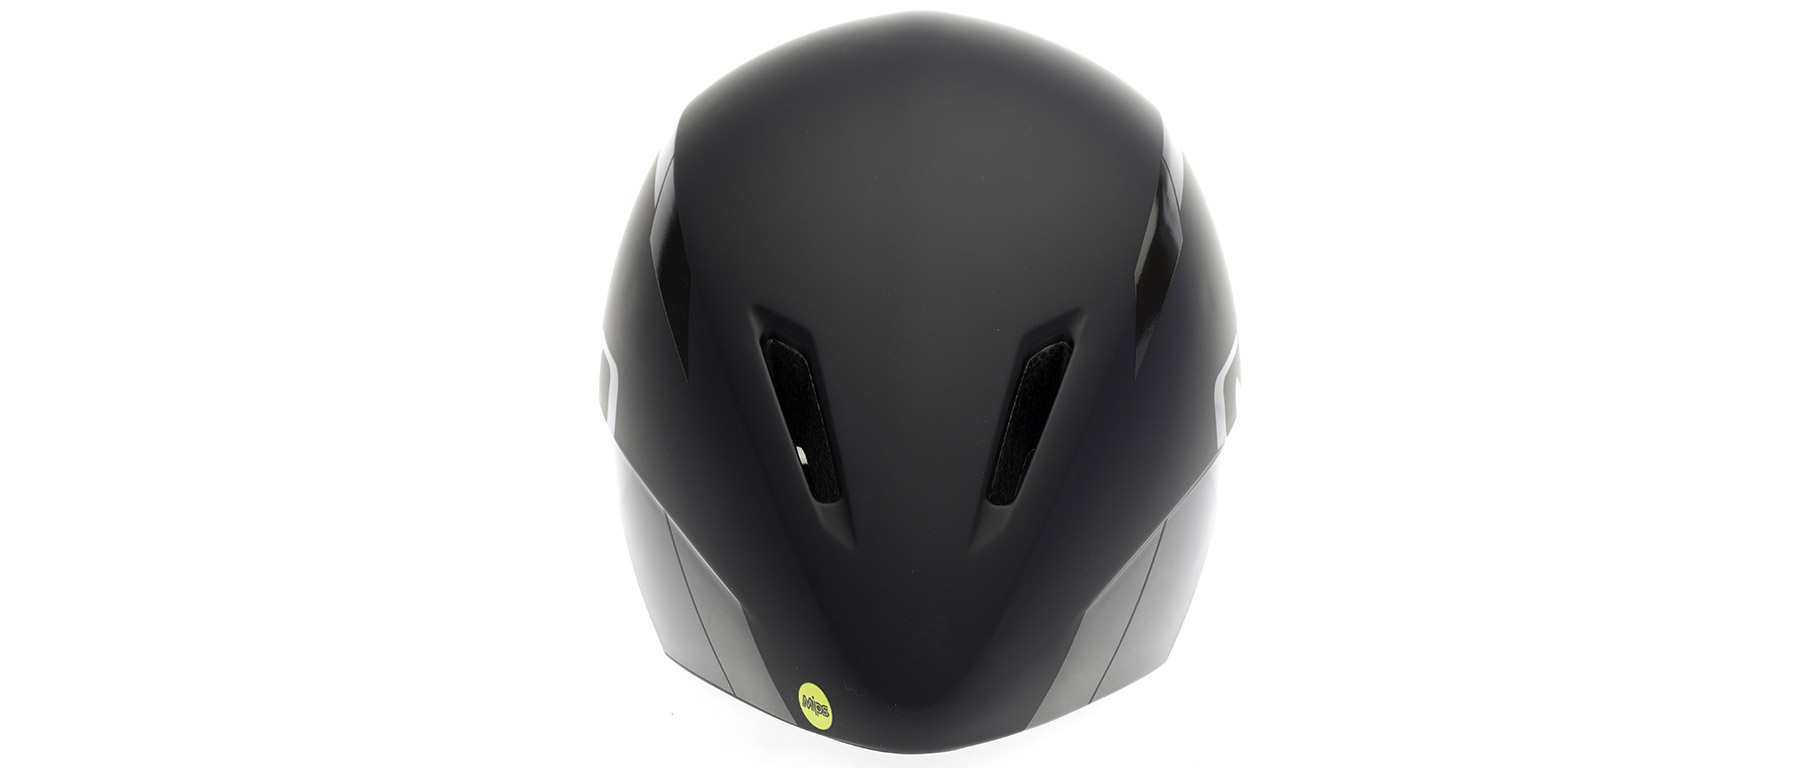 Giro Aerohead MIPS Helmet